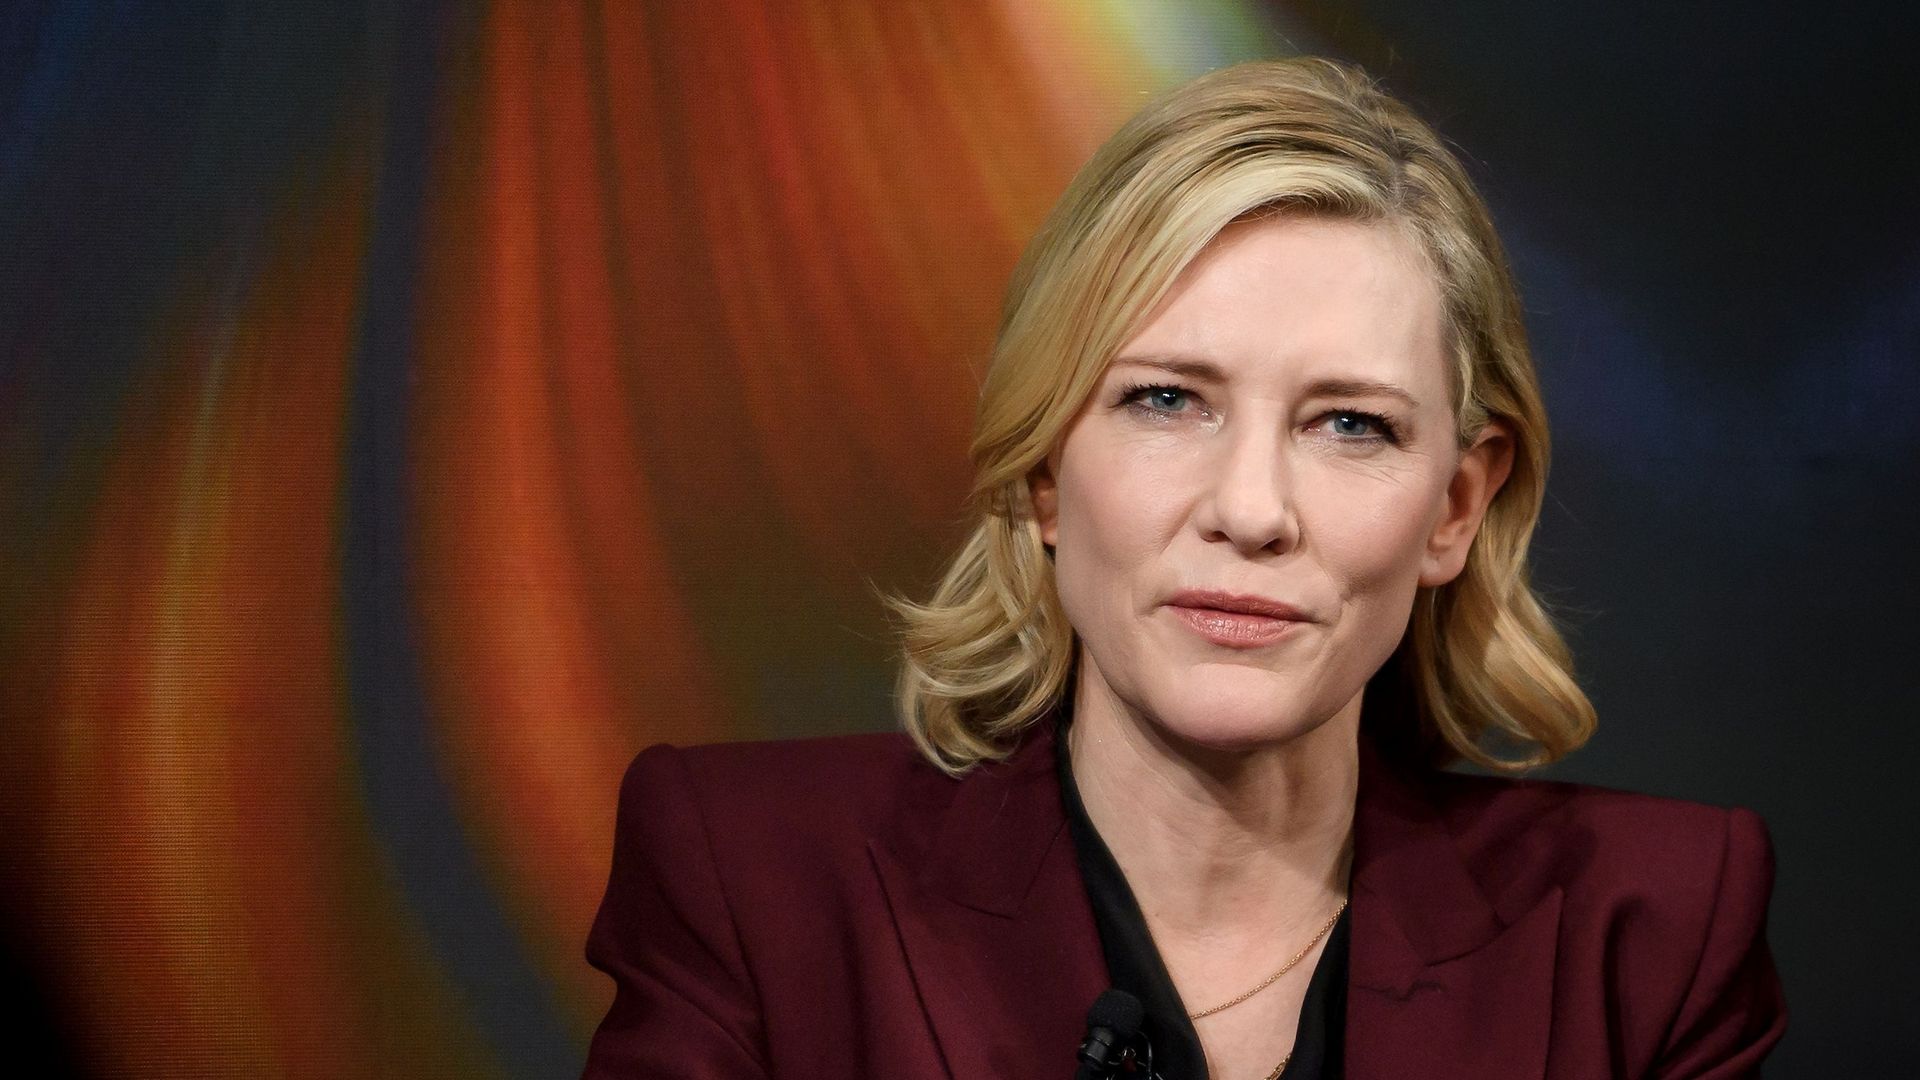 Cate Blanchett sera la présidente du jury du Festival de Cannes 2018